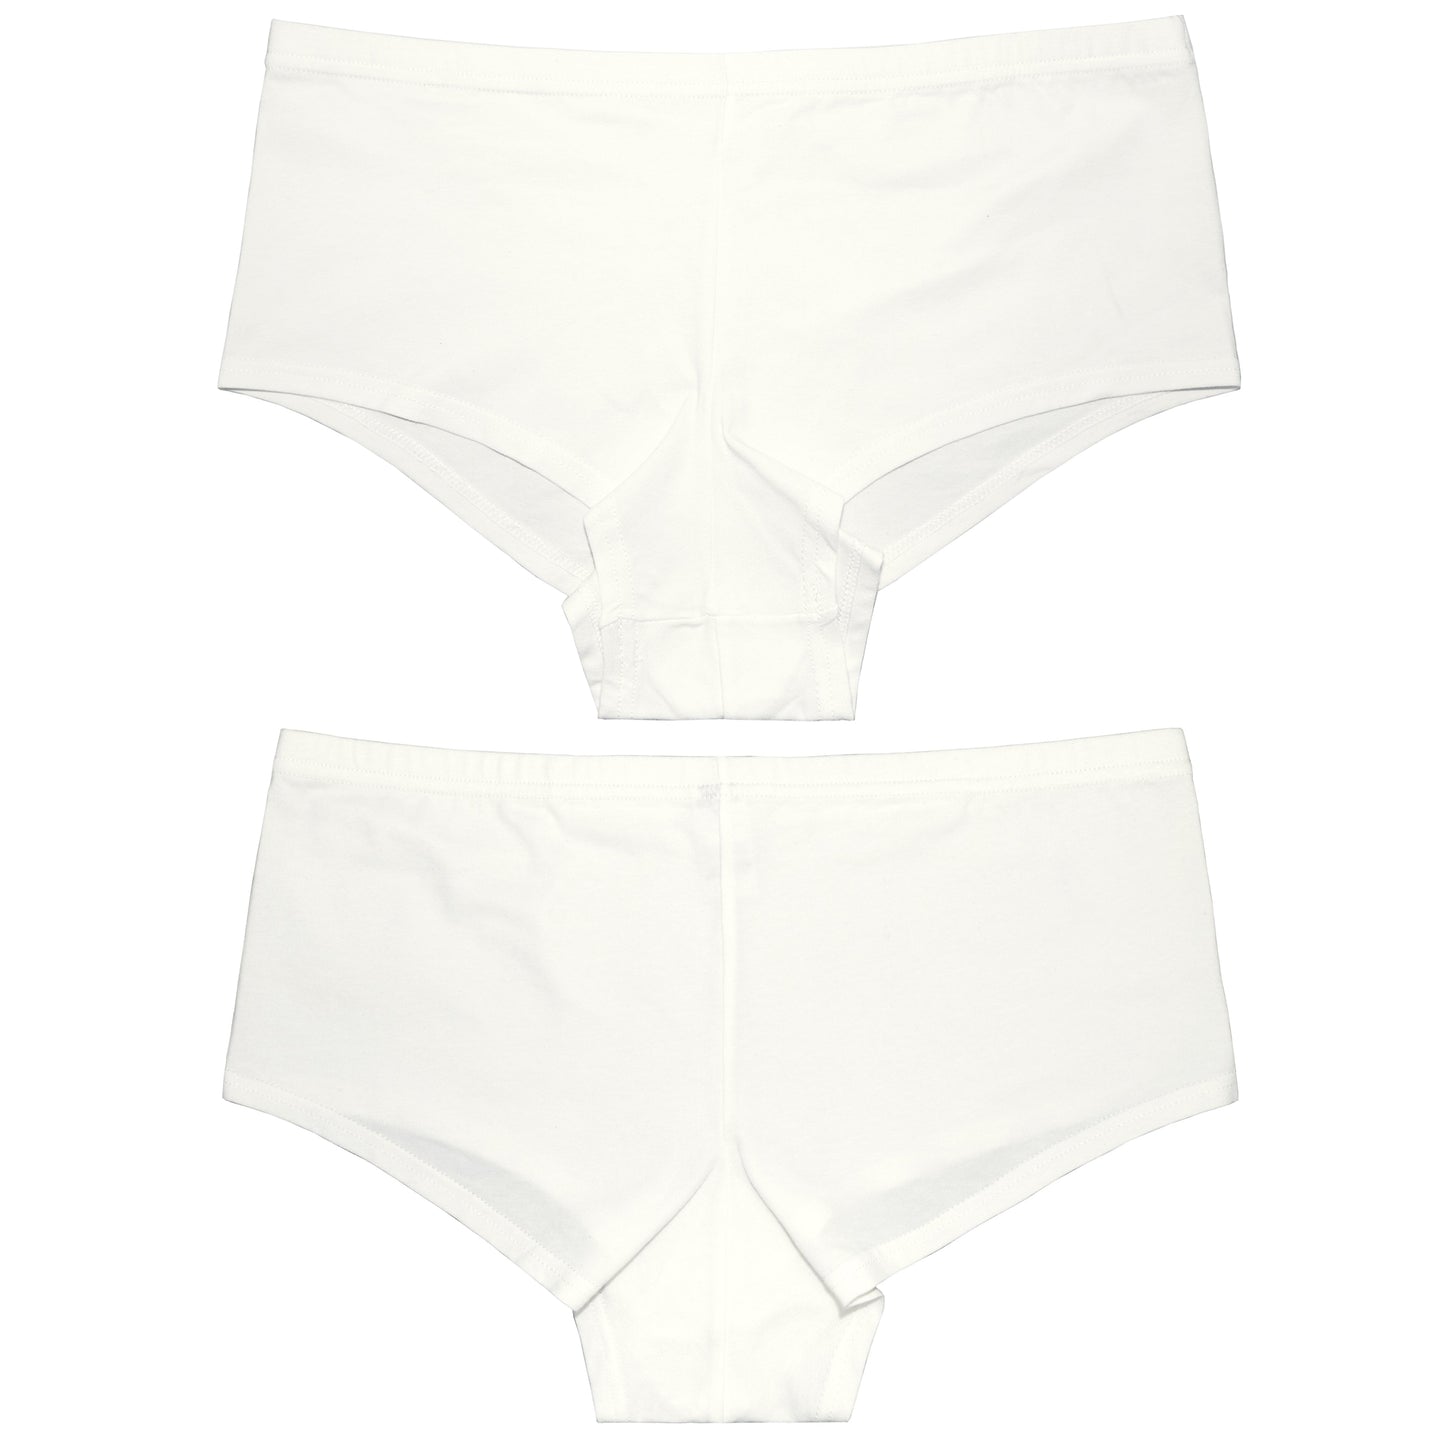 Women's Low Mid Waist Cotton Hipsters Underwear Panties